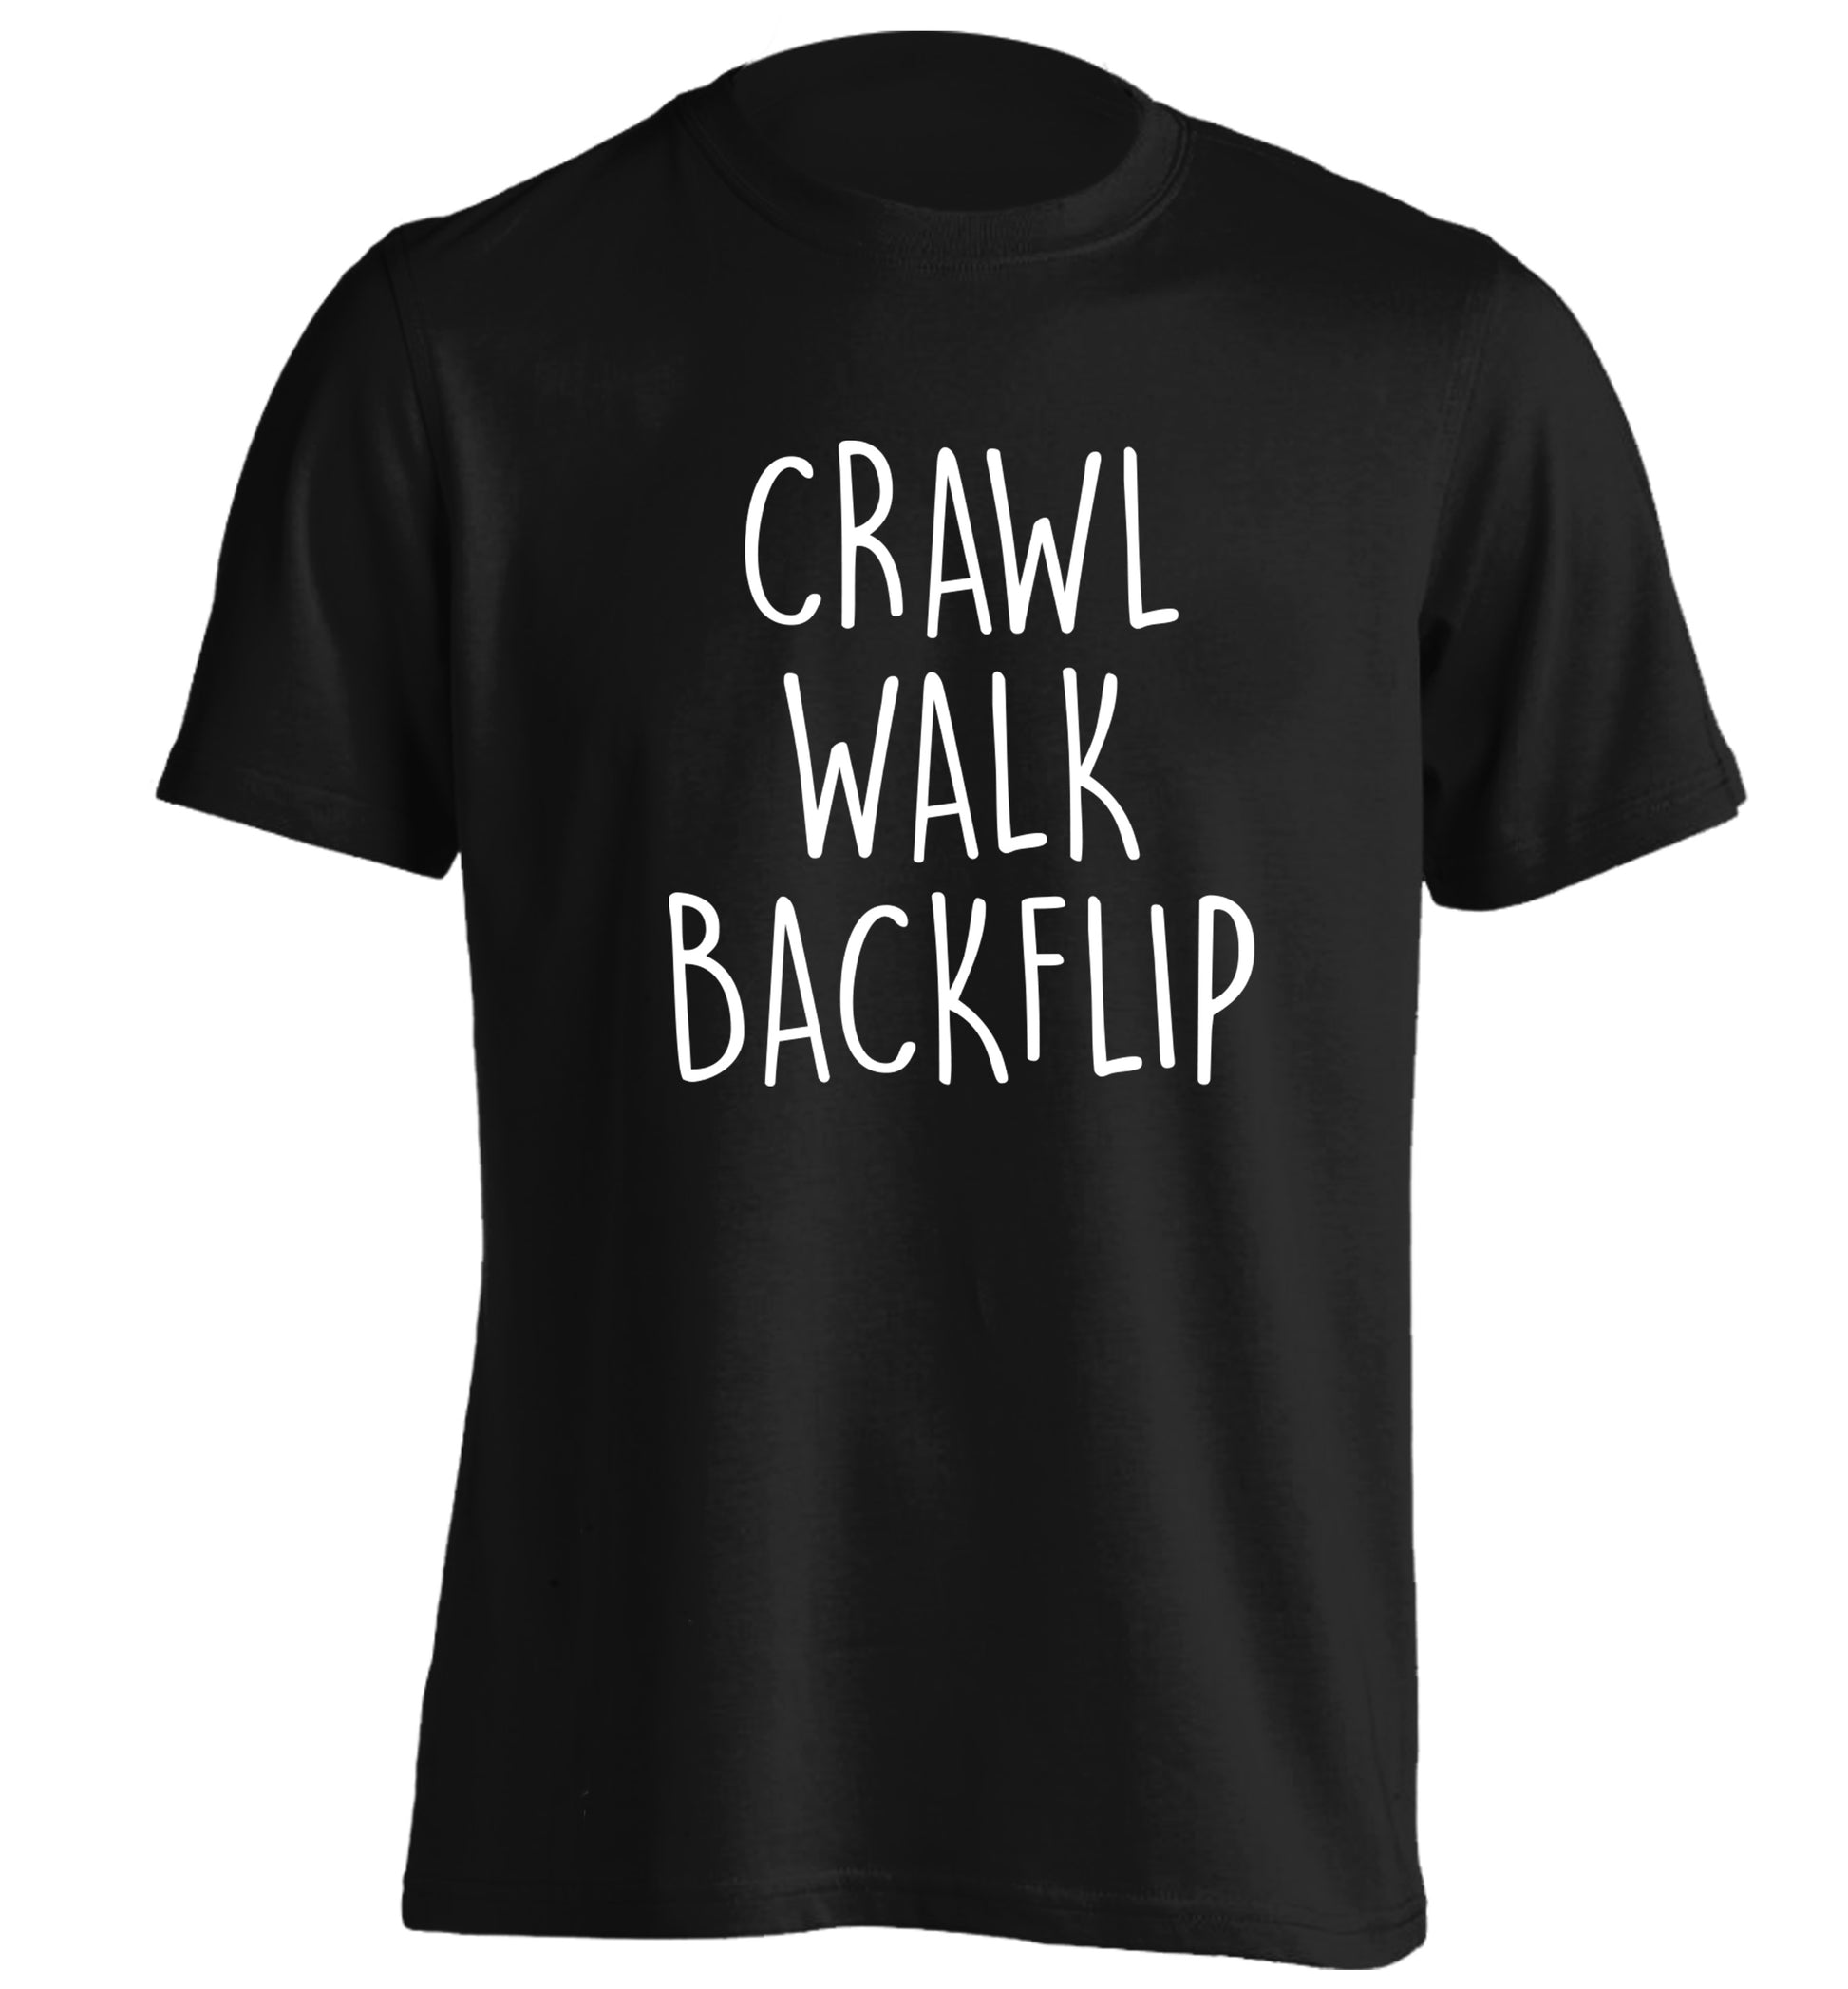 Crawl Walk Backflip adults unisex black Tshirt 2XL